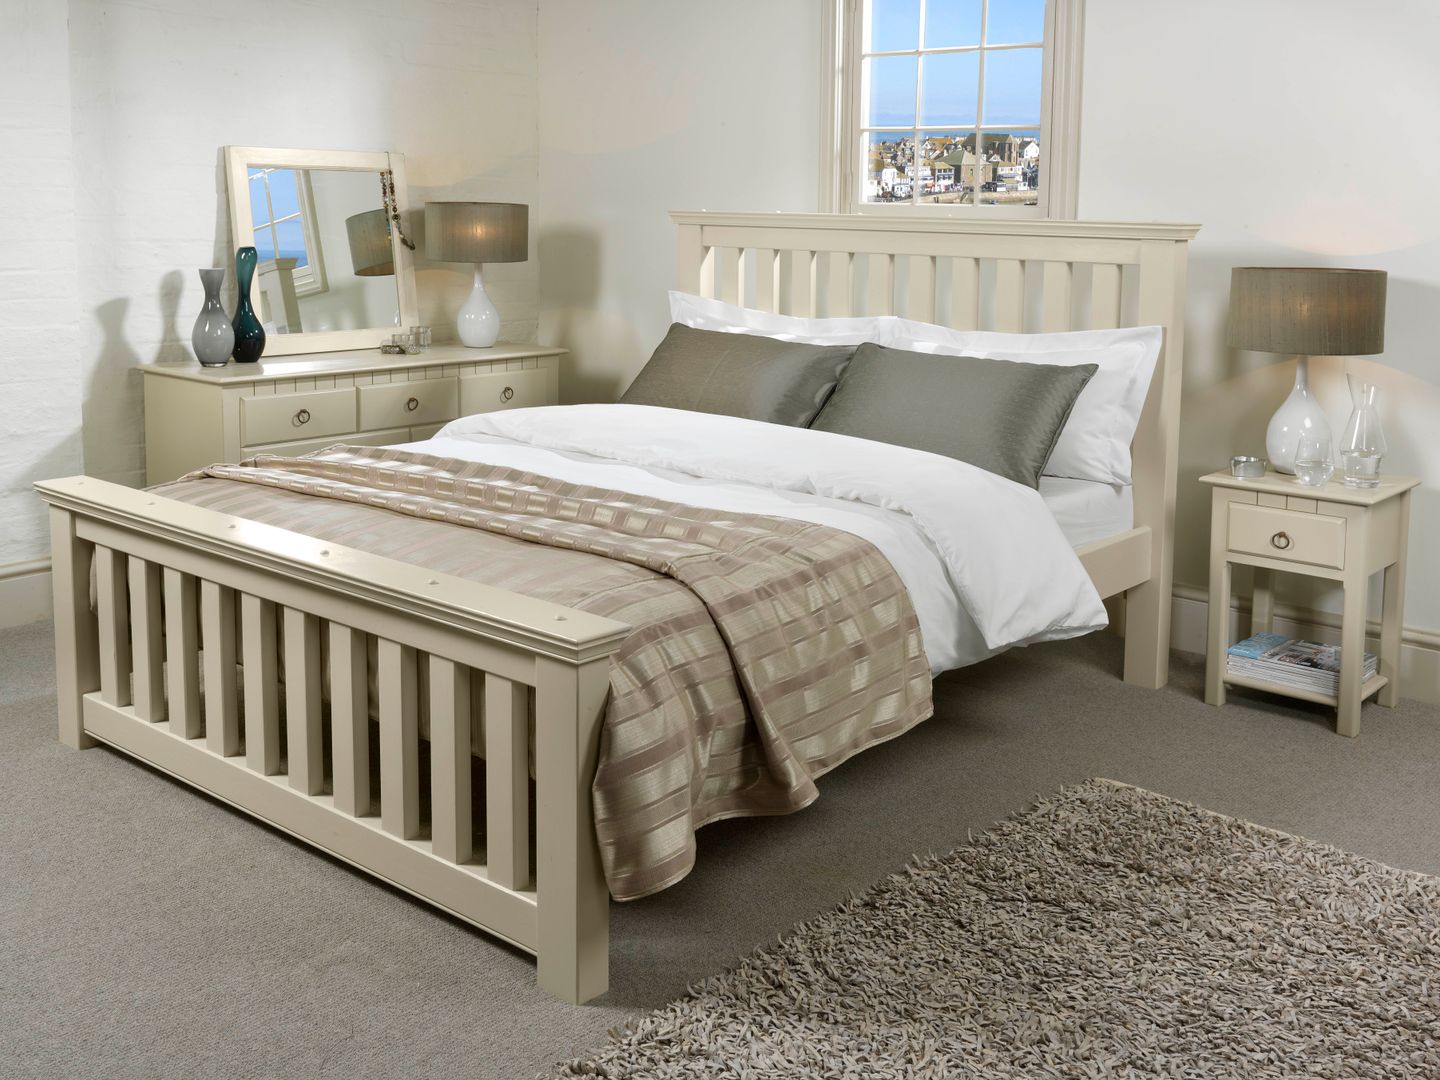 The Maine New England Bed Revival Beds Dormitorios de estilo moderno Camas y cabeceras